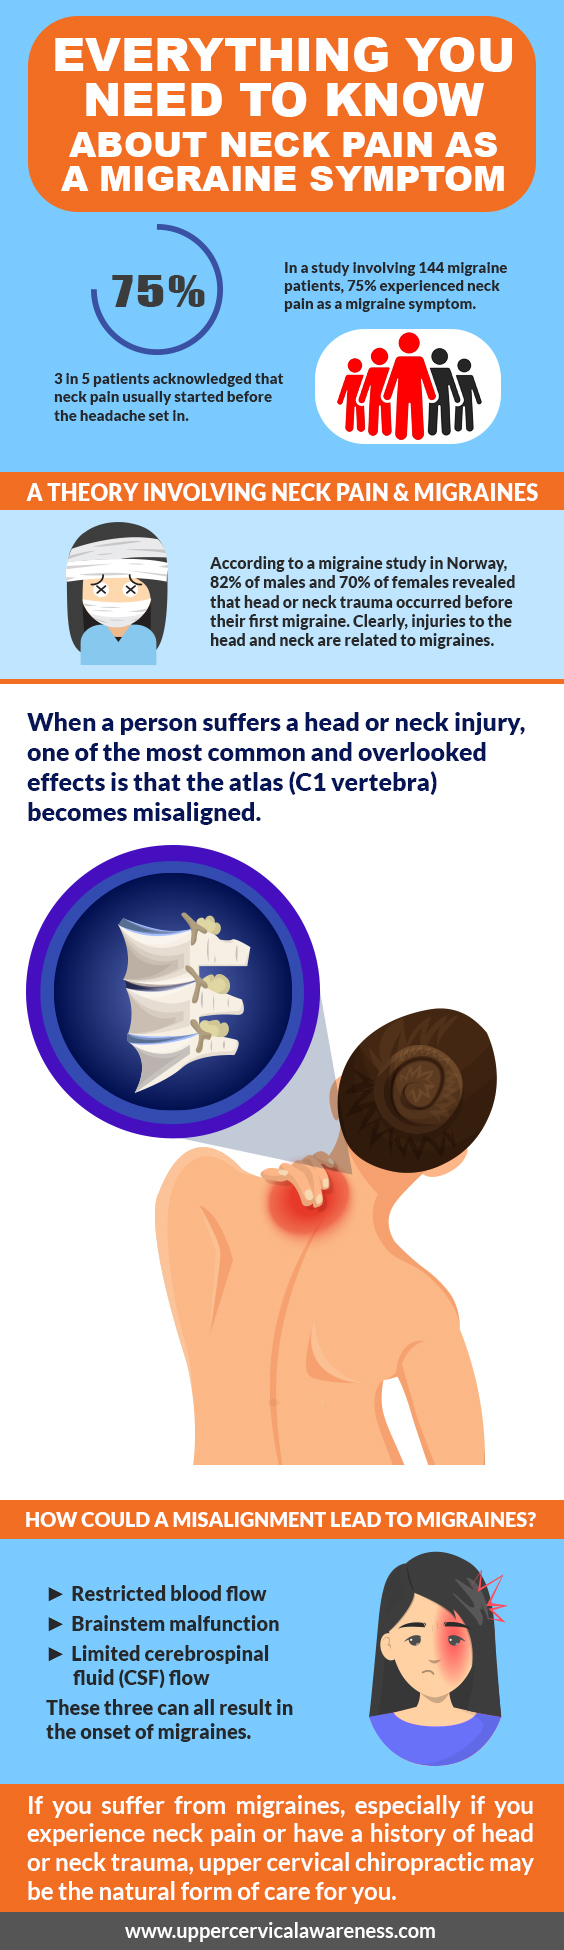 everything-need-know-neck-pain-migraine-symptom